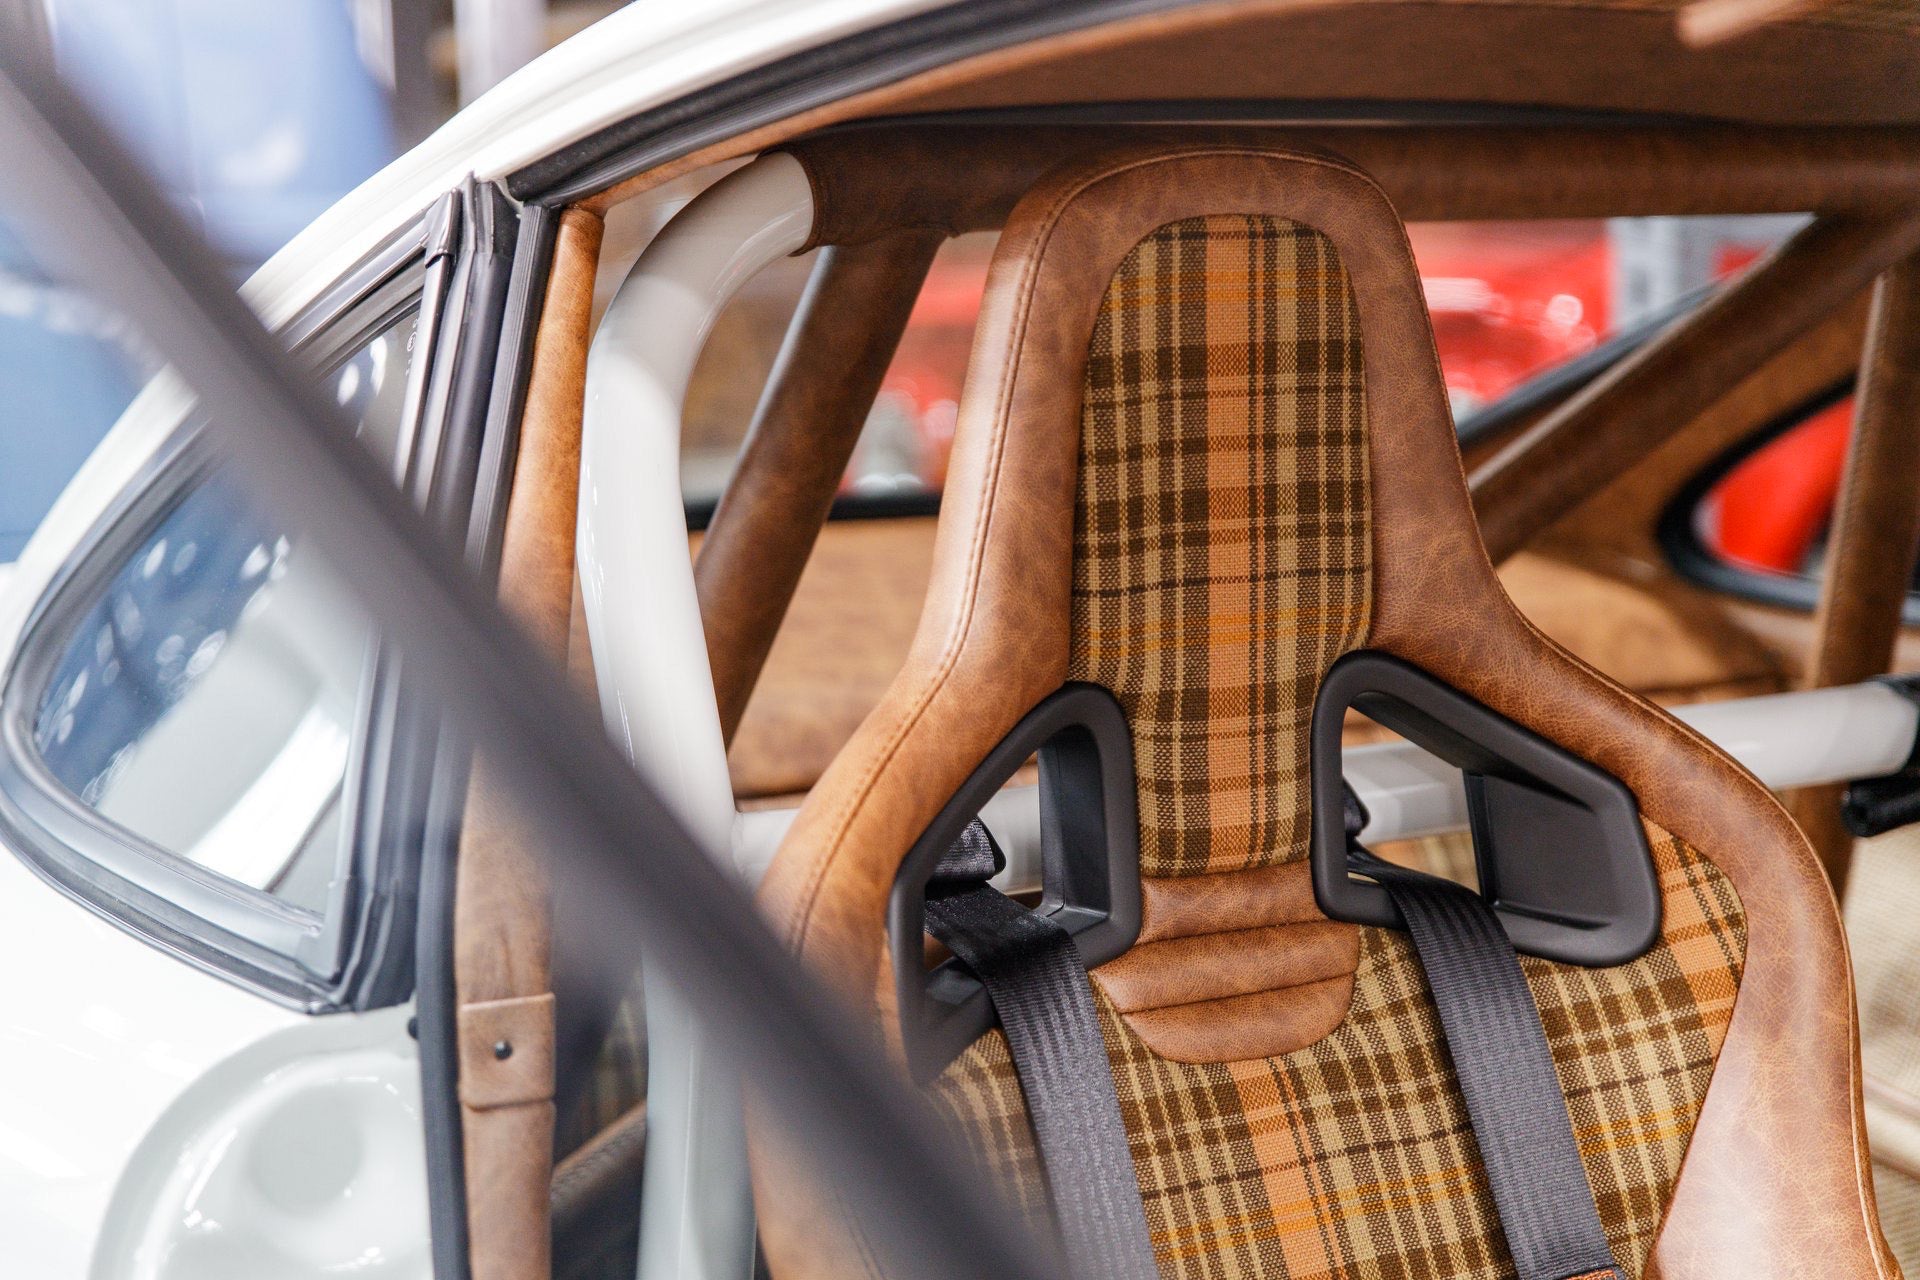 Porsche Karo Madras Plaid Tartan Seat Fabric sold by the yard